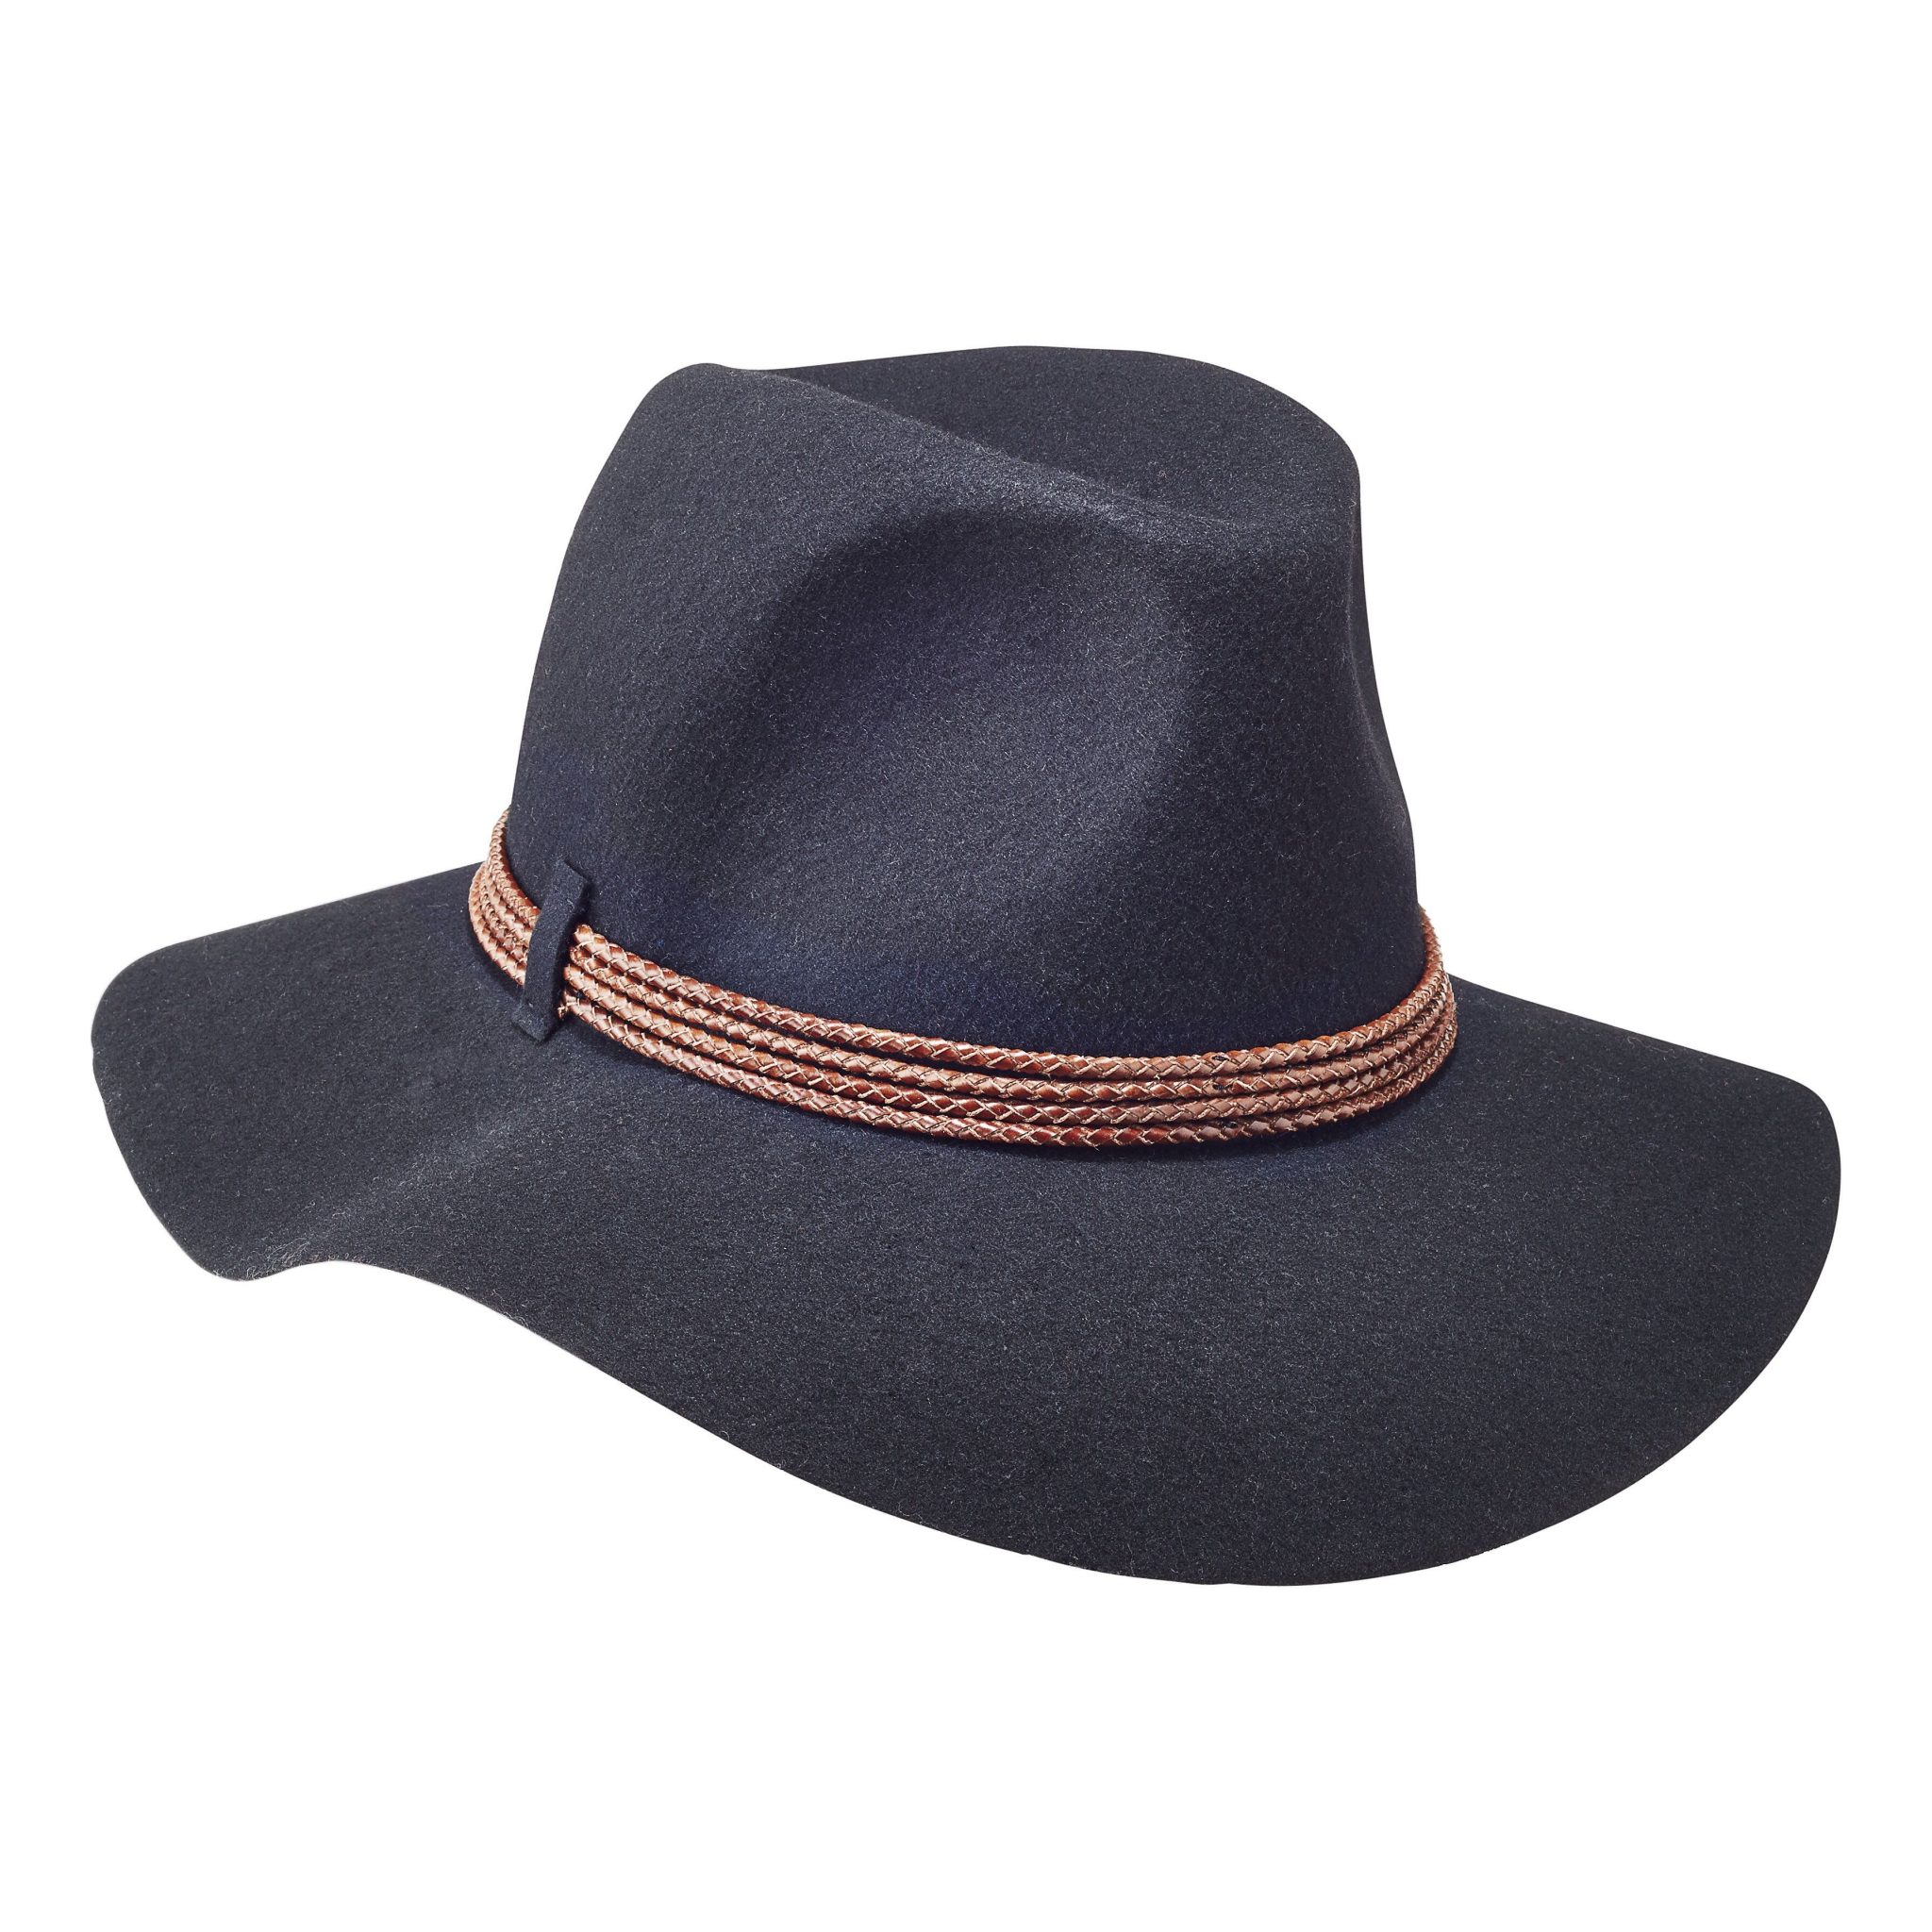 Wide Brim Wool Hat  $39.99  Compare at $75 